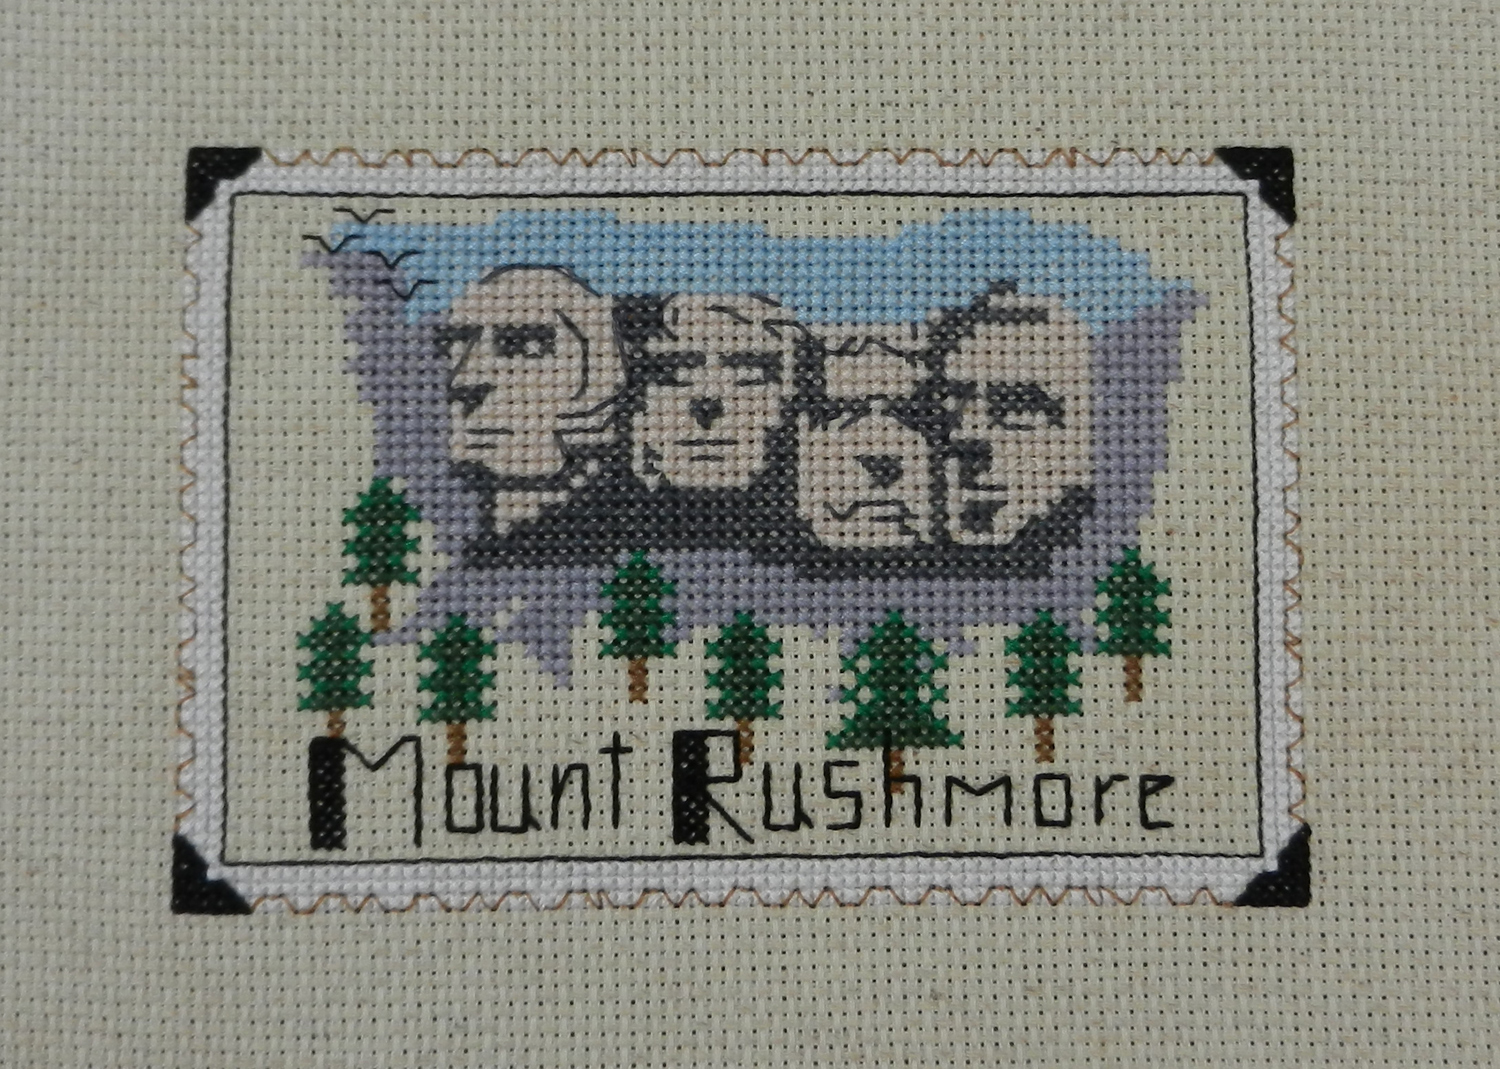 mt rushmore picture perfect cross stitch pattern